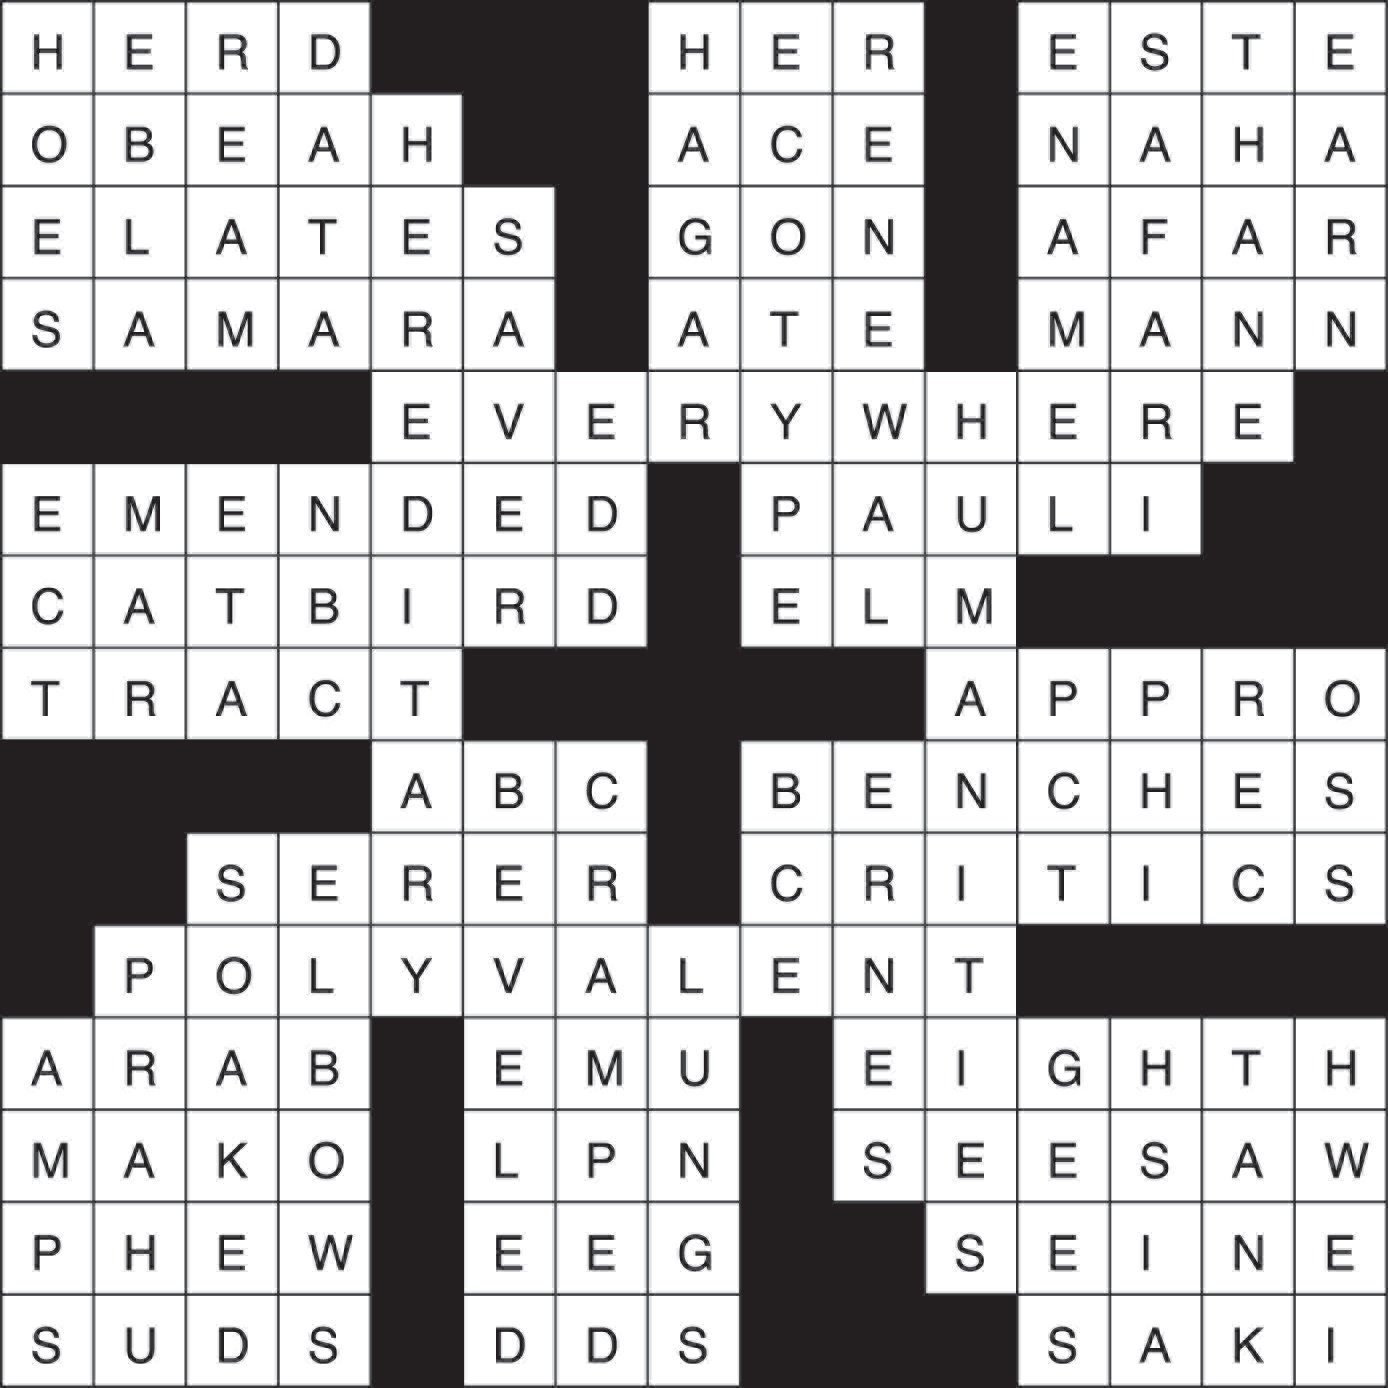 Common Market Letters Crossword